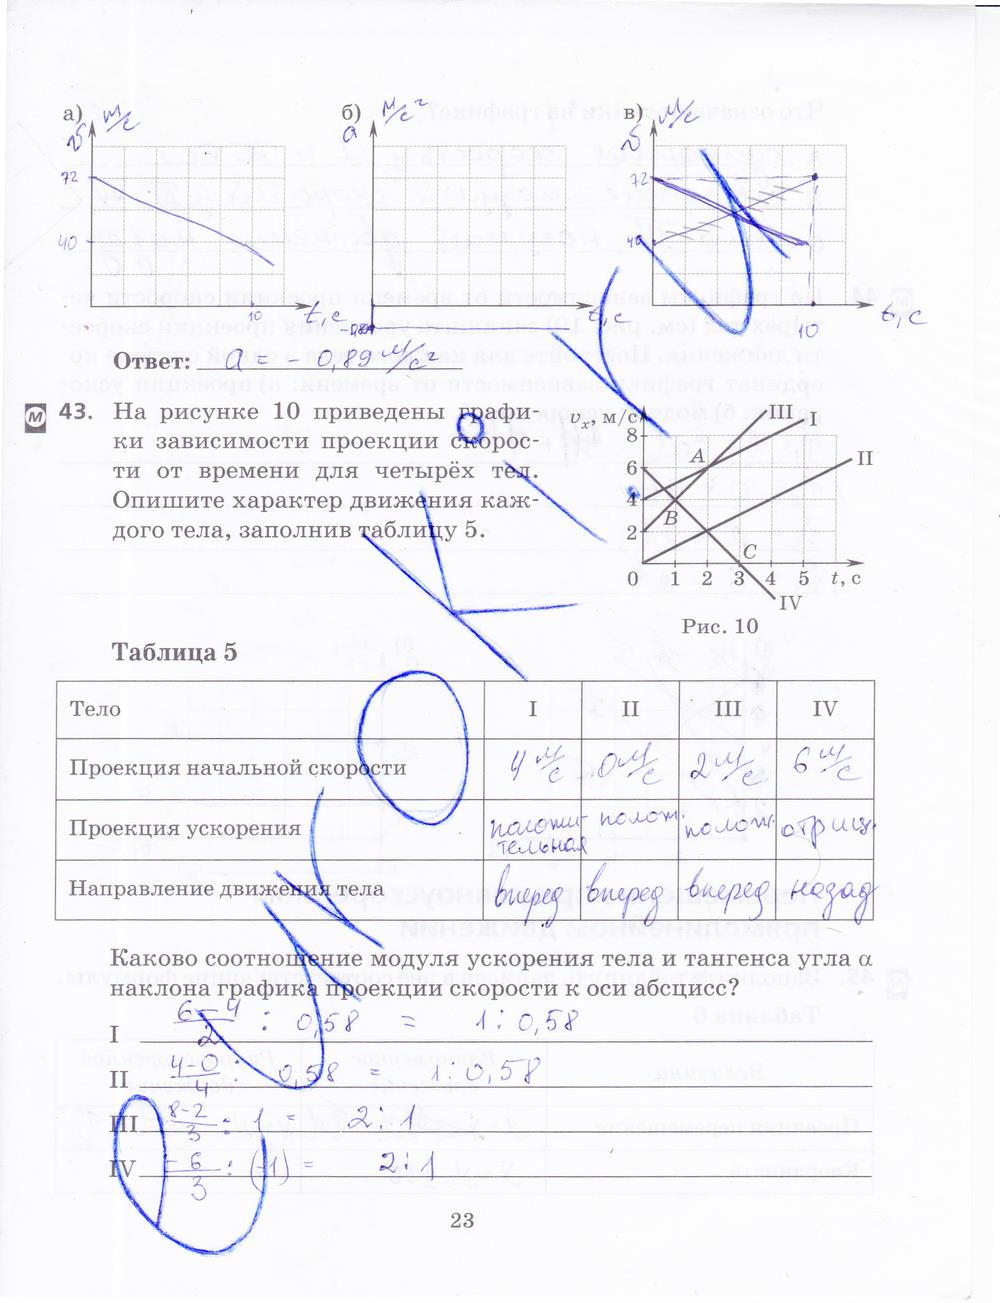 гдз 9 класс рабочая тетрадь страница 23 физика Пурышева, Важеевская, Чаругин